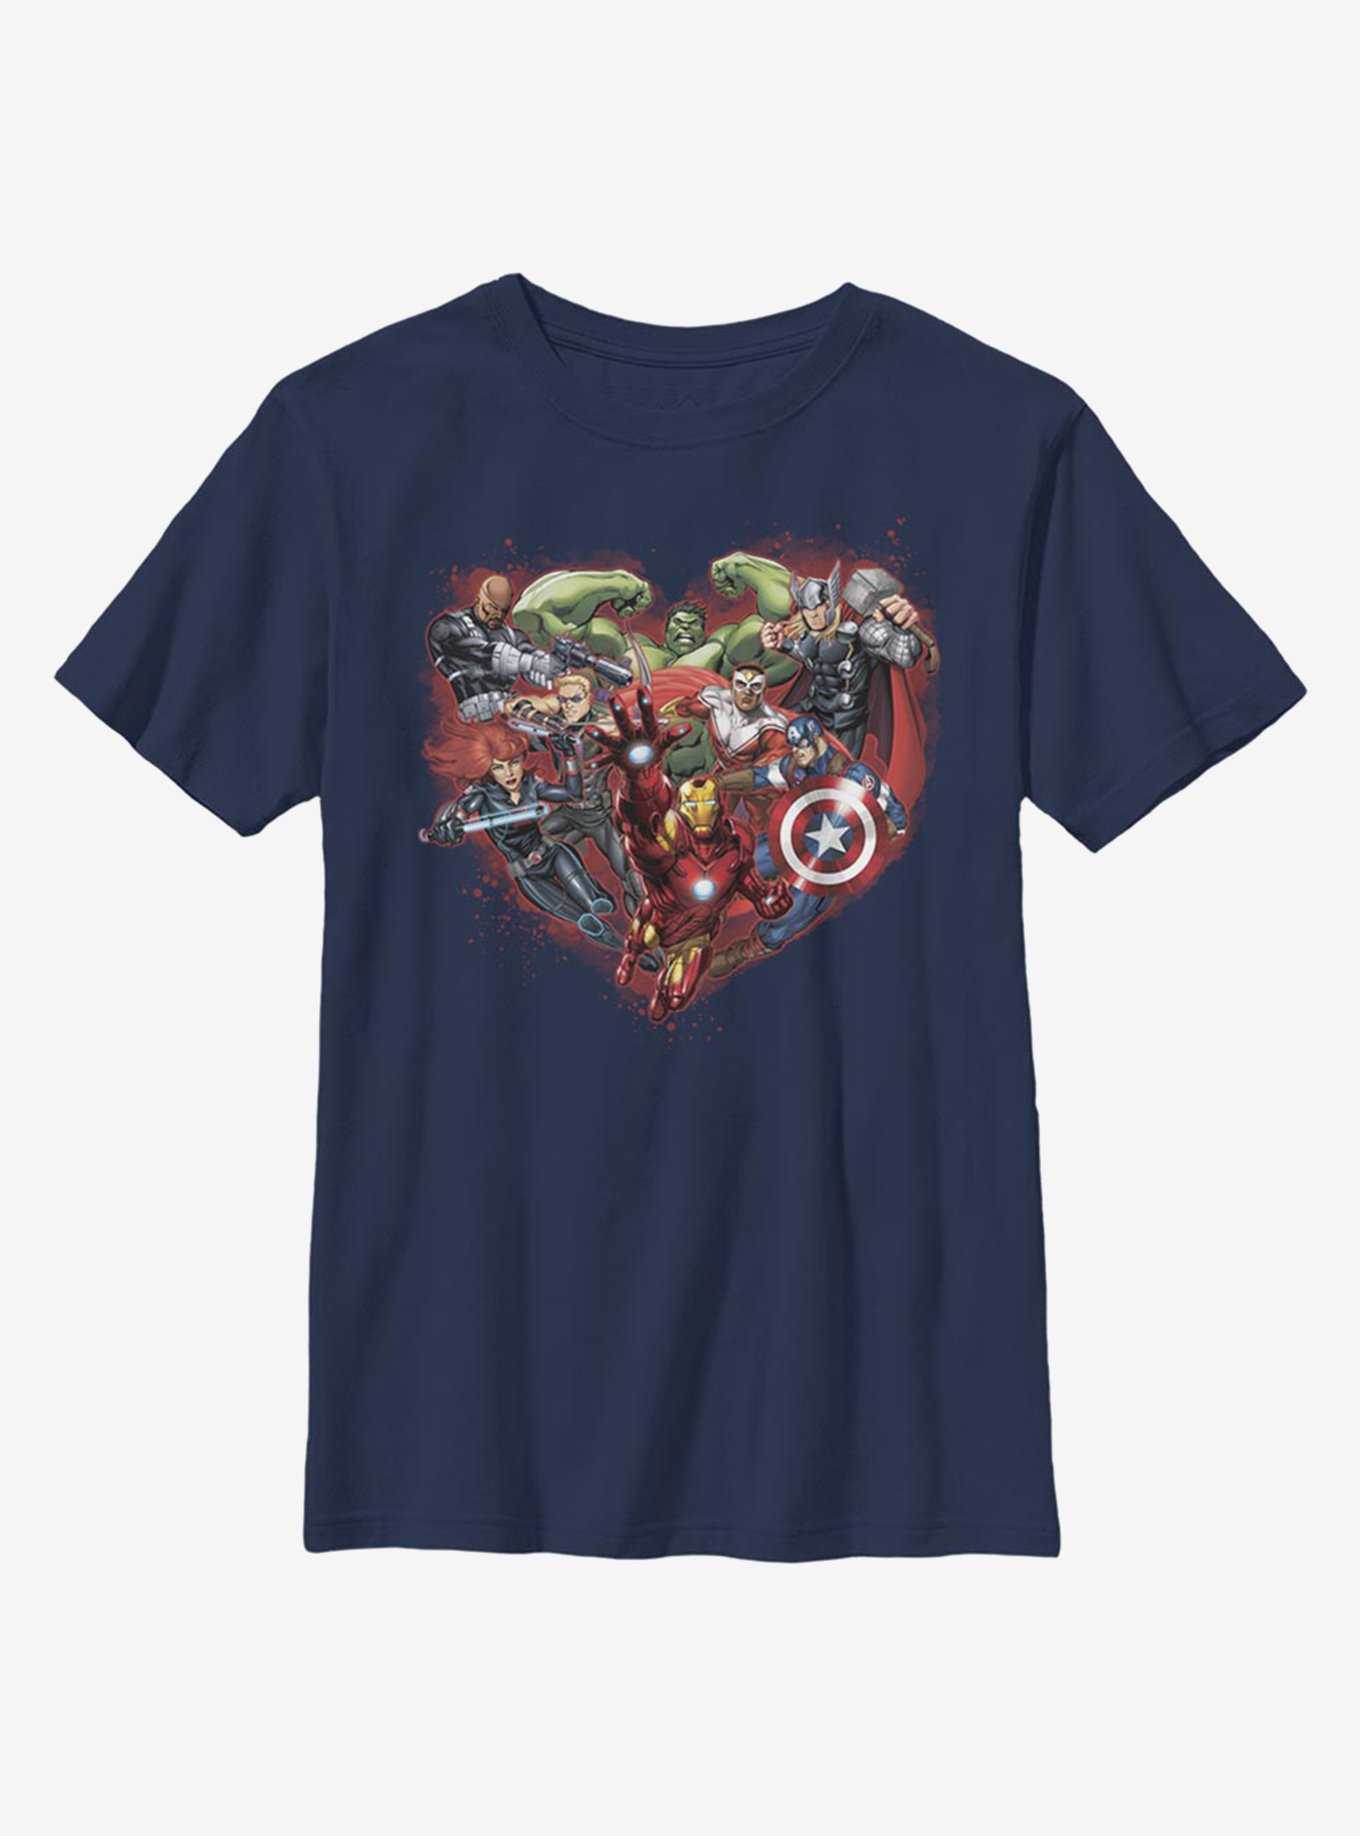 Her OFFICIAL Shirts | Merchandise & Avengers Universe